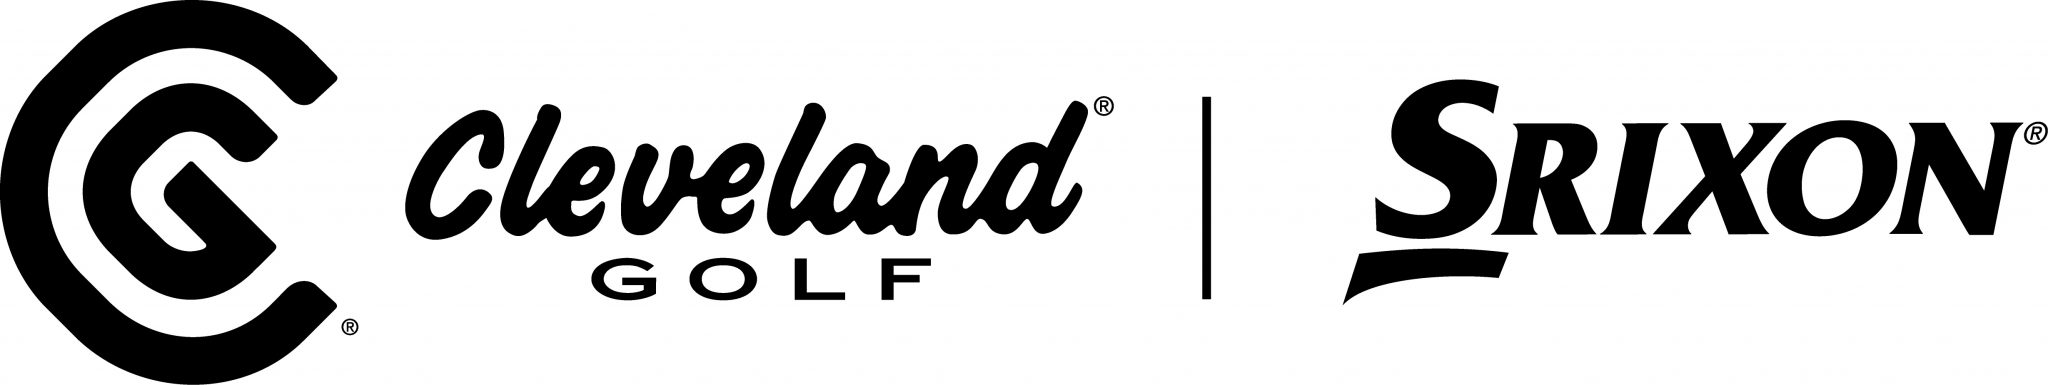 Cleveland Golf - Srixon Corporate Logo - Welcome to Renfrew ...